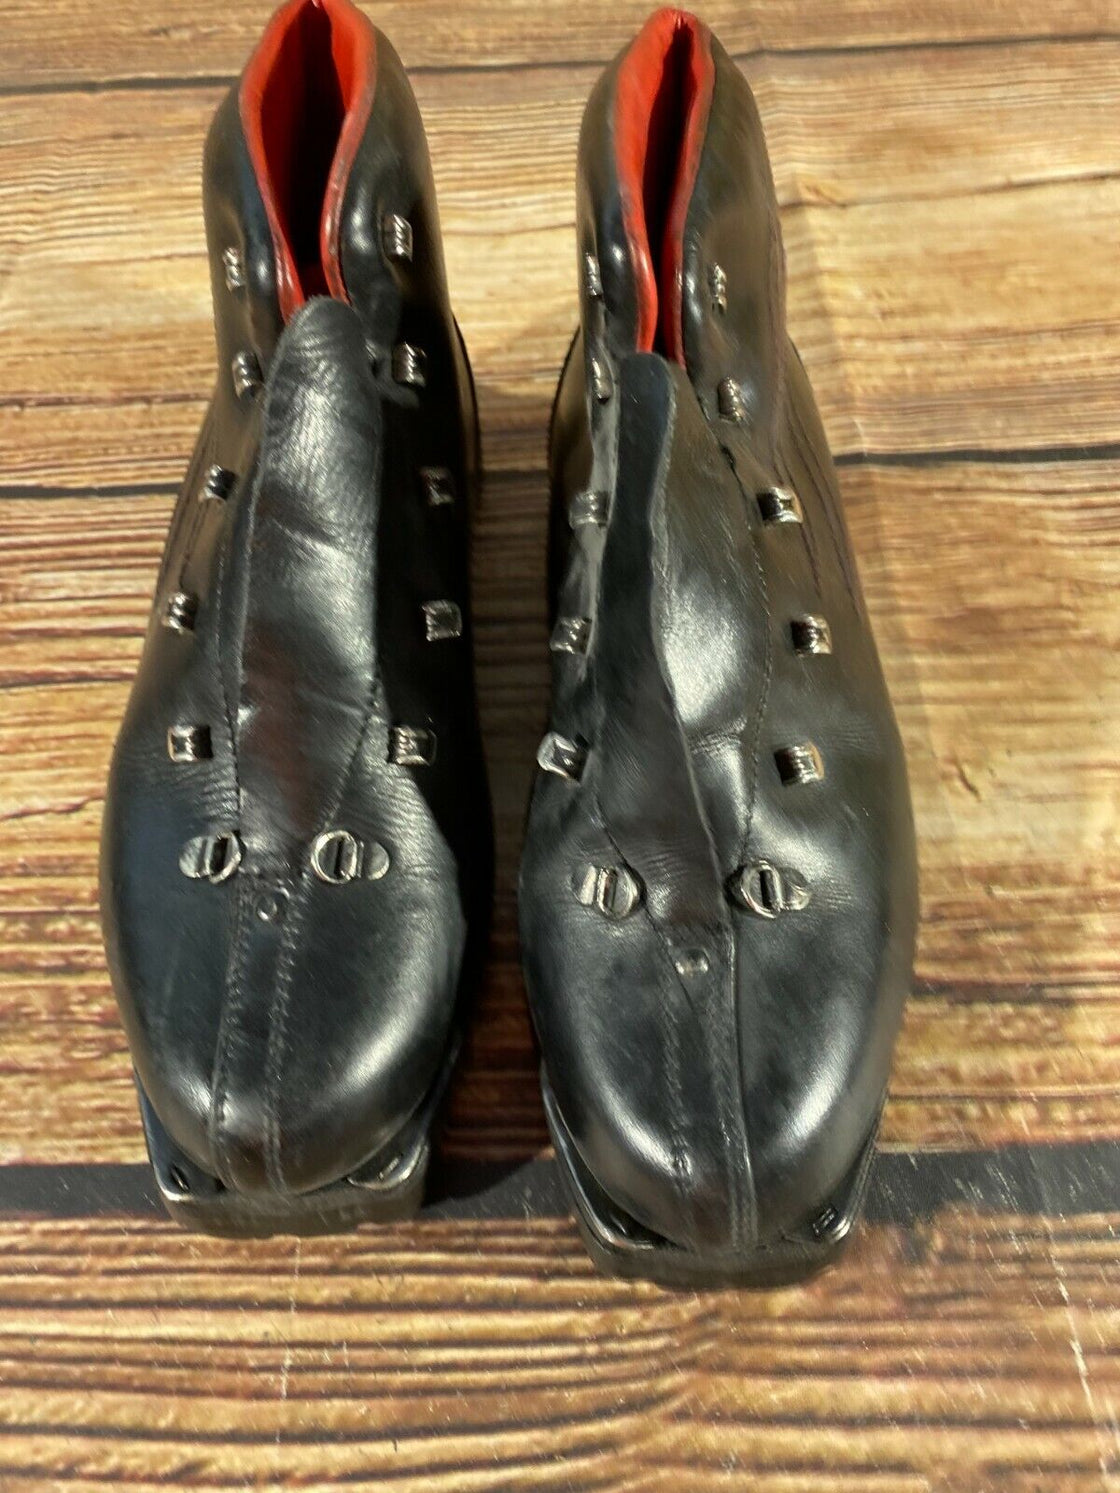 LAVERNA Leather Vintage Alpine Ski Boots EU42 US8.5 Mondo 260 for Cable Bindings